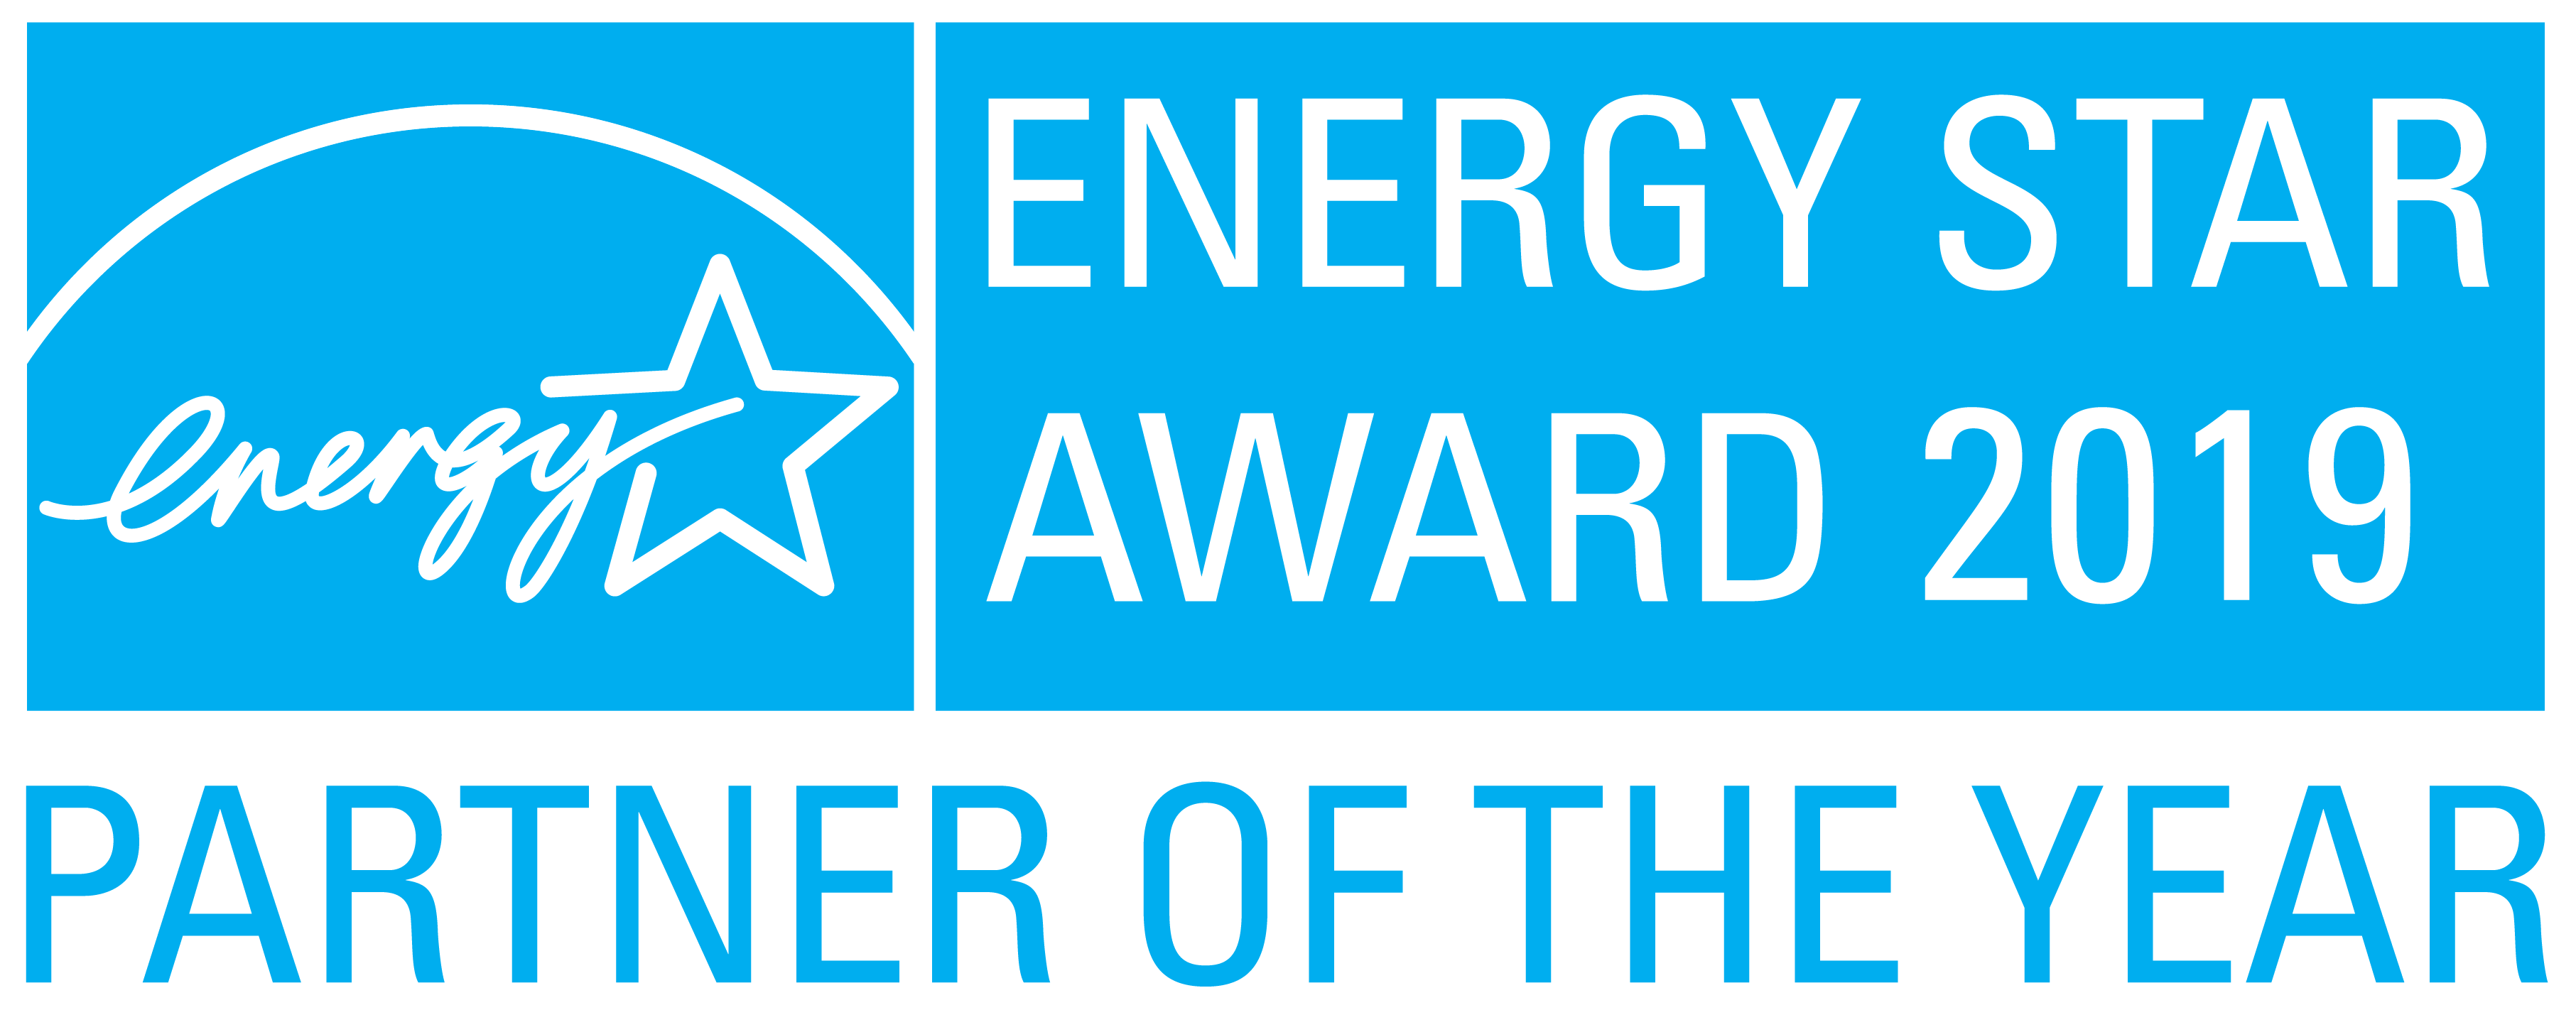 ENERGY STAR AWARD 2019 Partner of the Year Logo